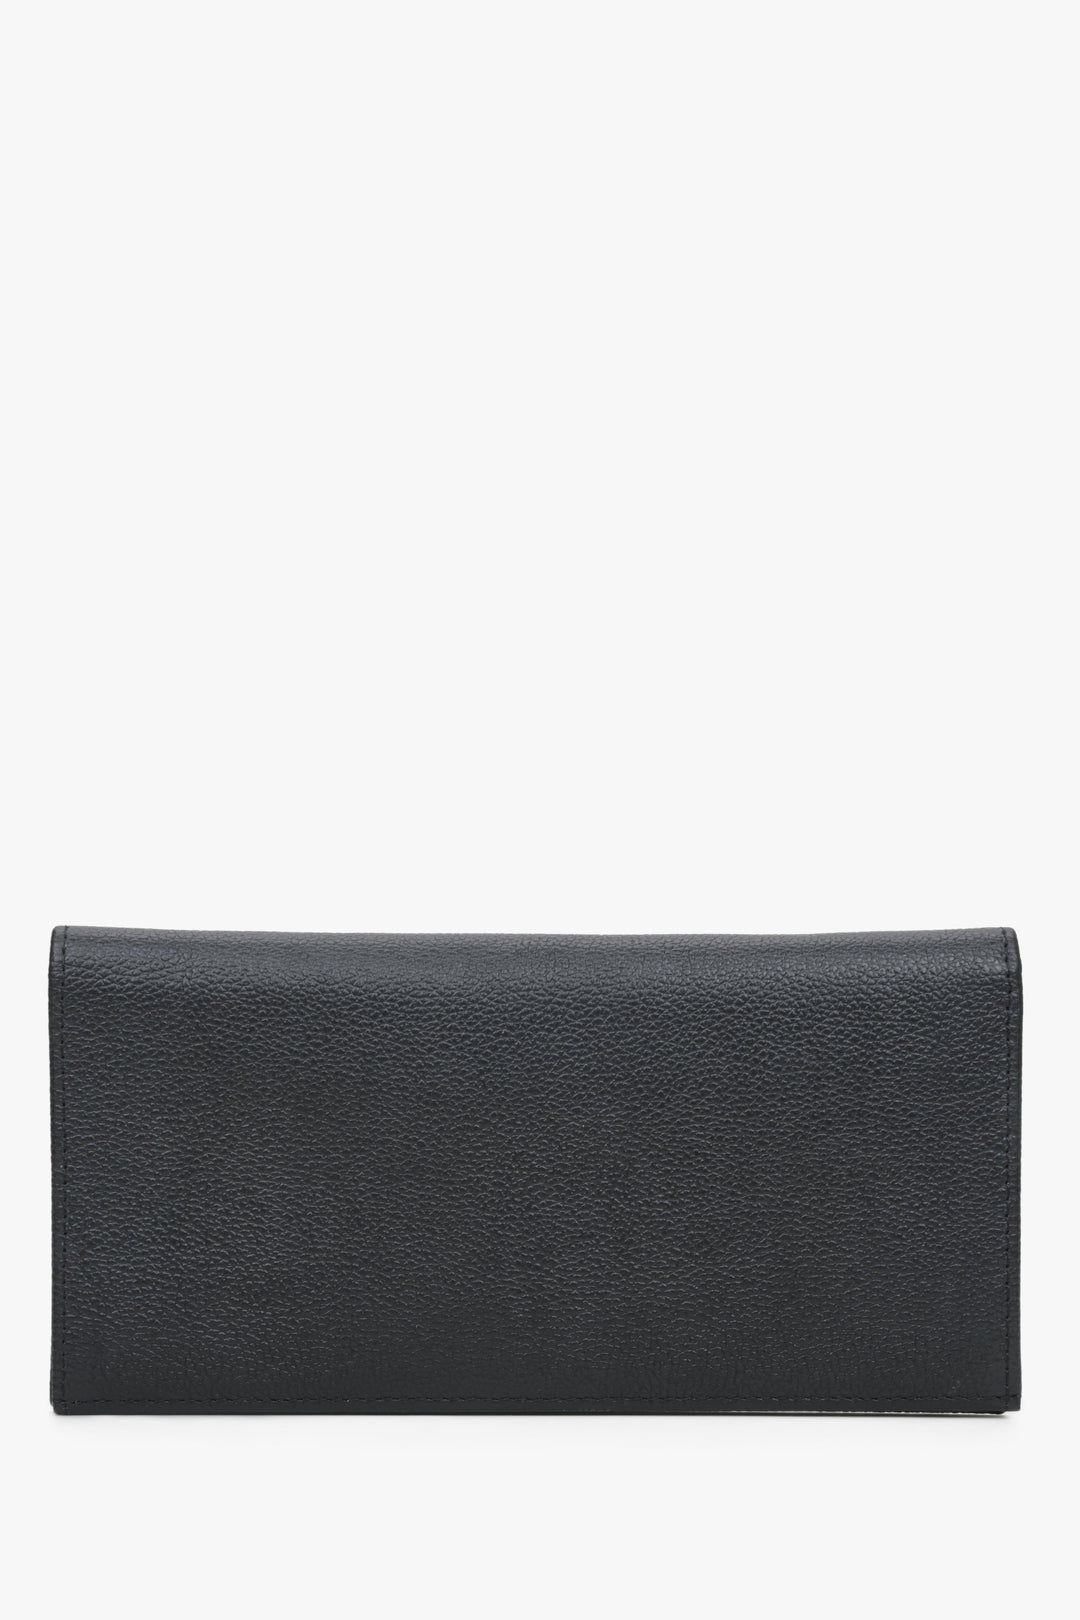 Large men's  black wallet made of genuine leather.